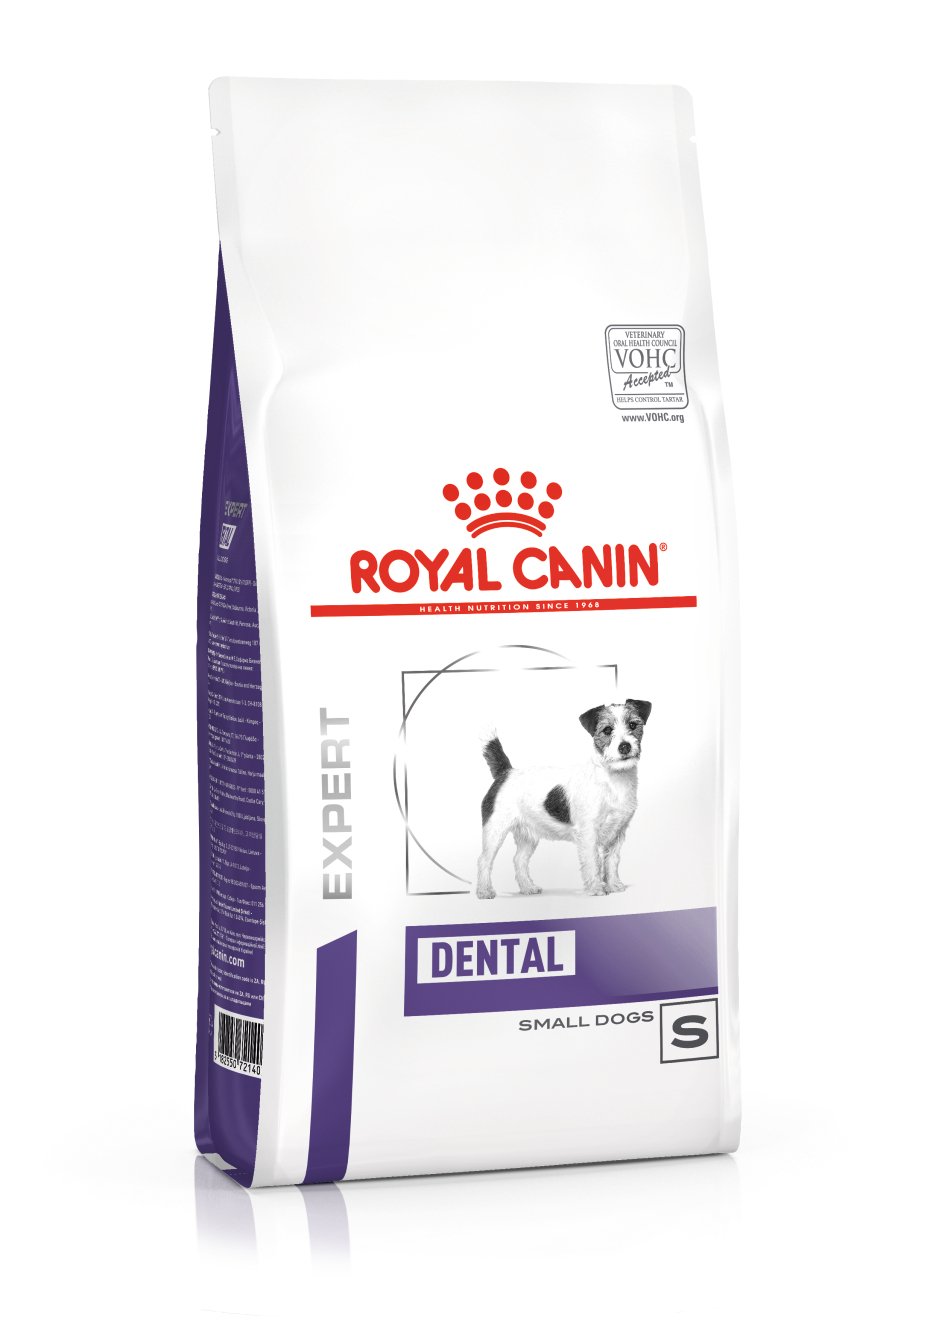 Royal Canin Expert Dental Small Dogs pour chiens de petites tailles